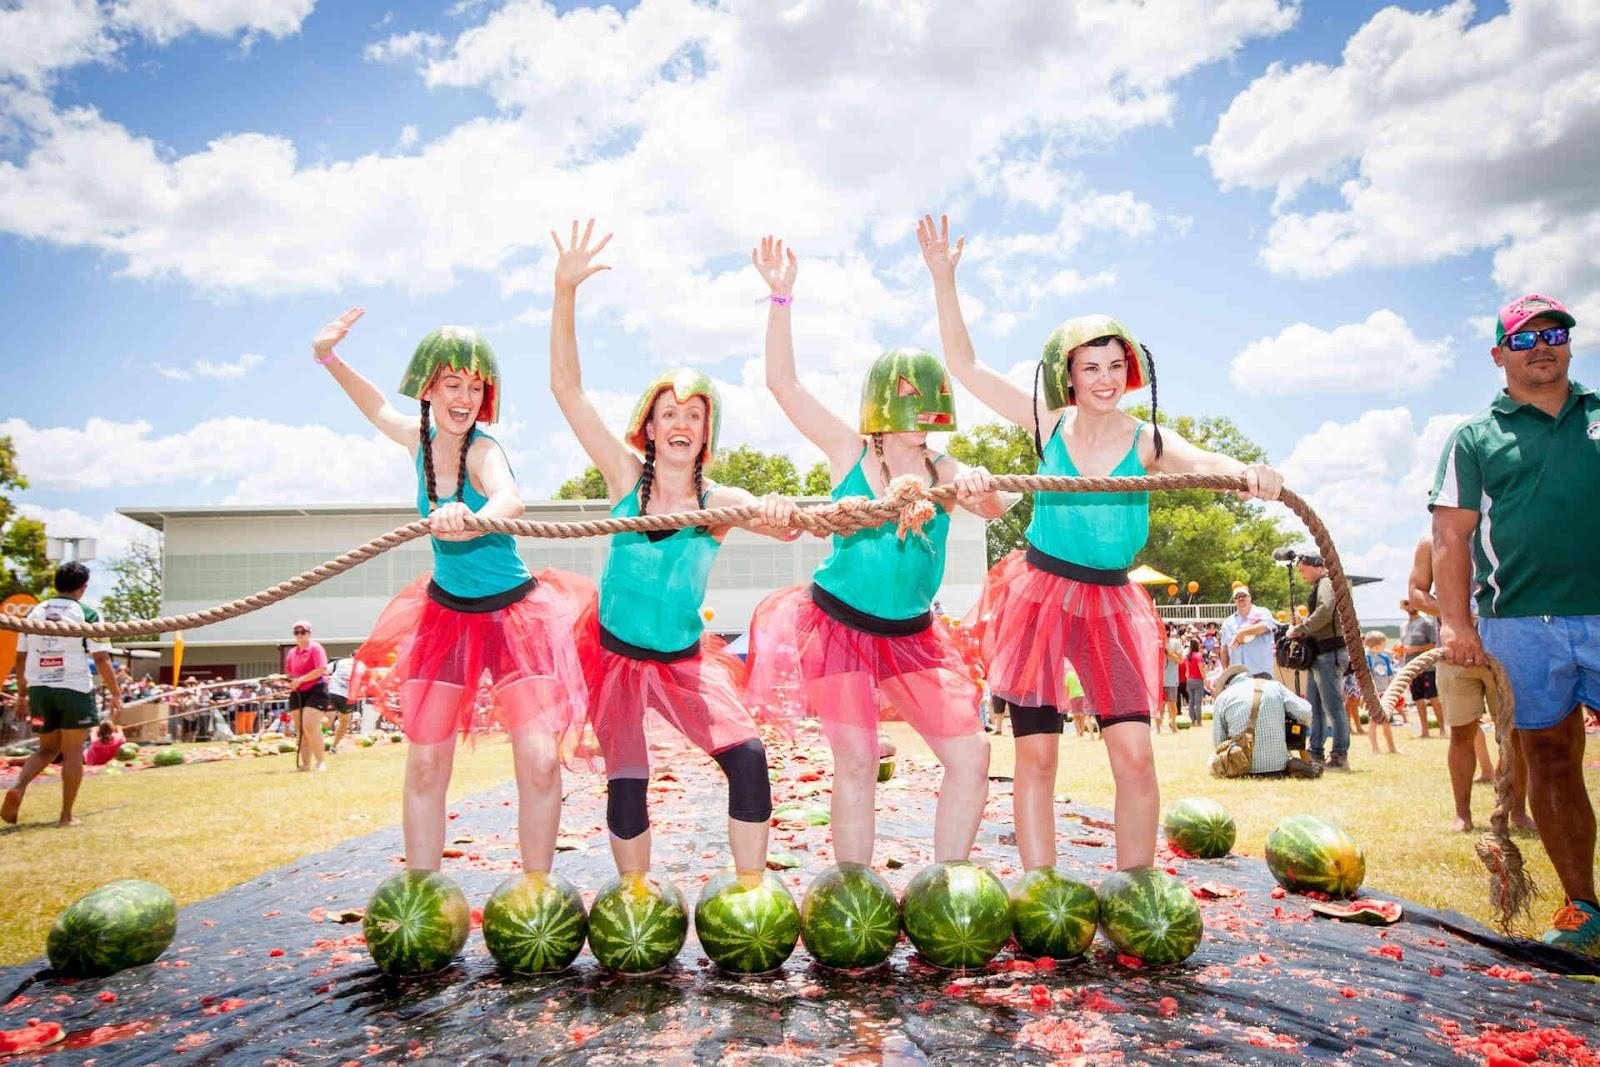 Messy fun at the Chinchilla Melon Festival in the Western Down Region Queensland